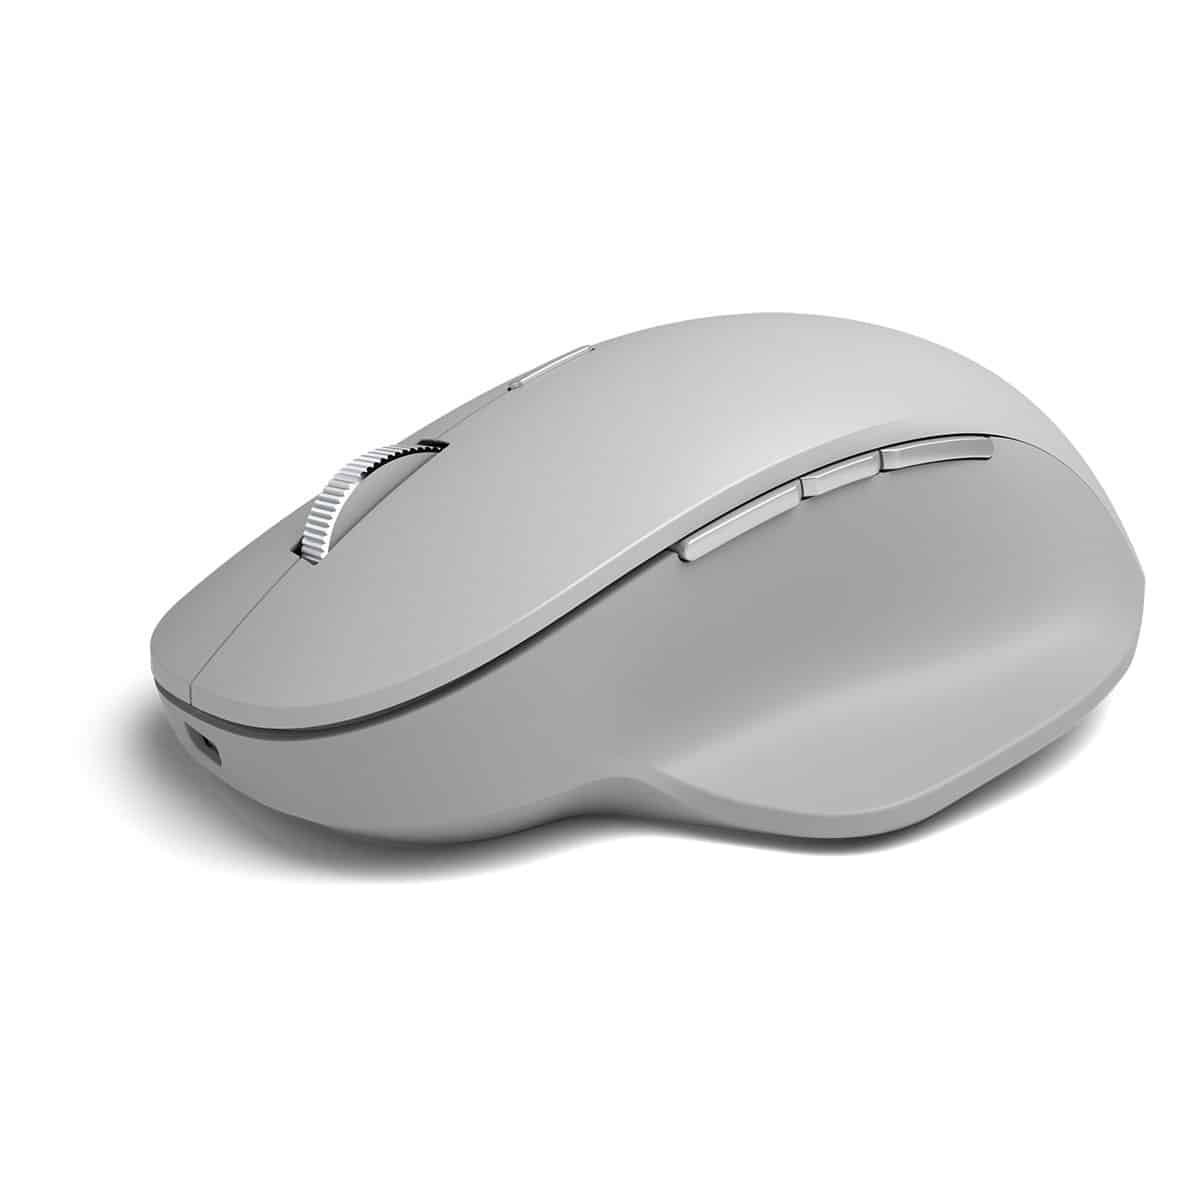 Microsoft Surface Precision Mouse Specs Image